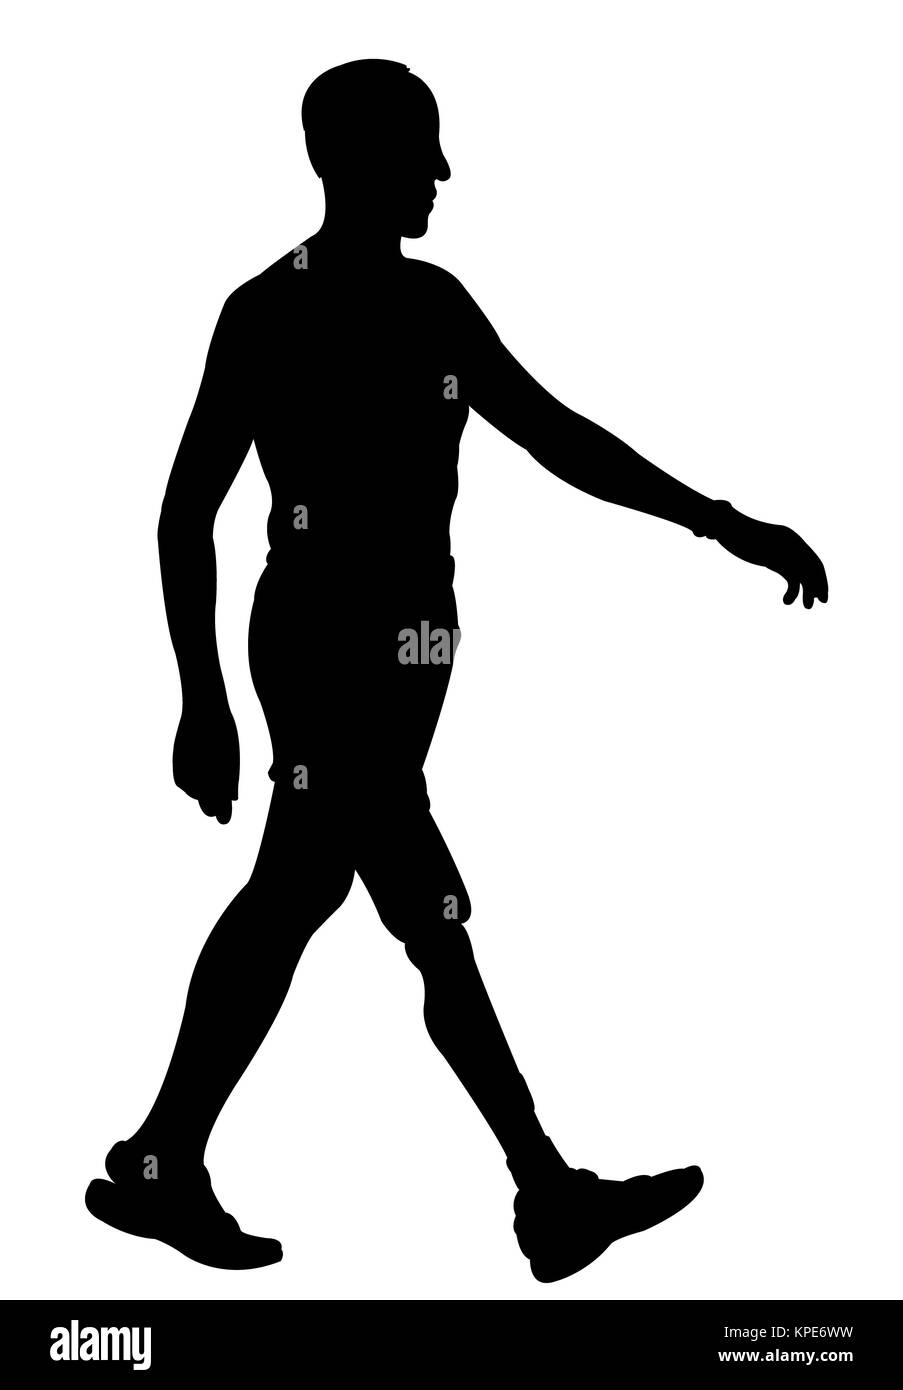 man walking with one prothesis leg Stock Photo